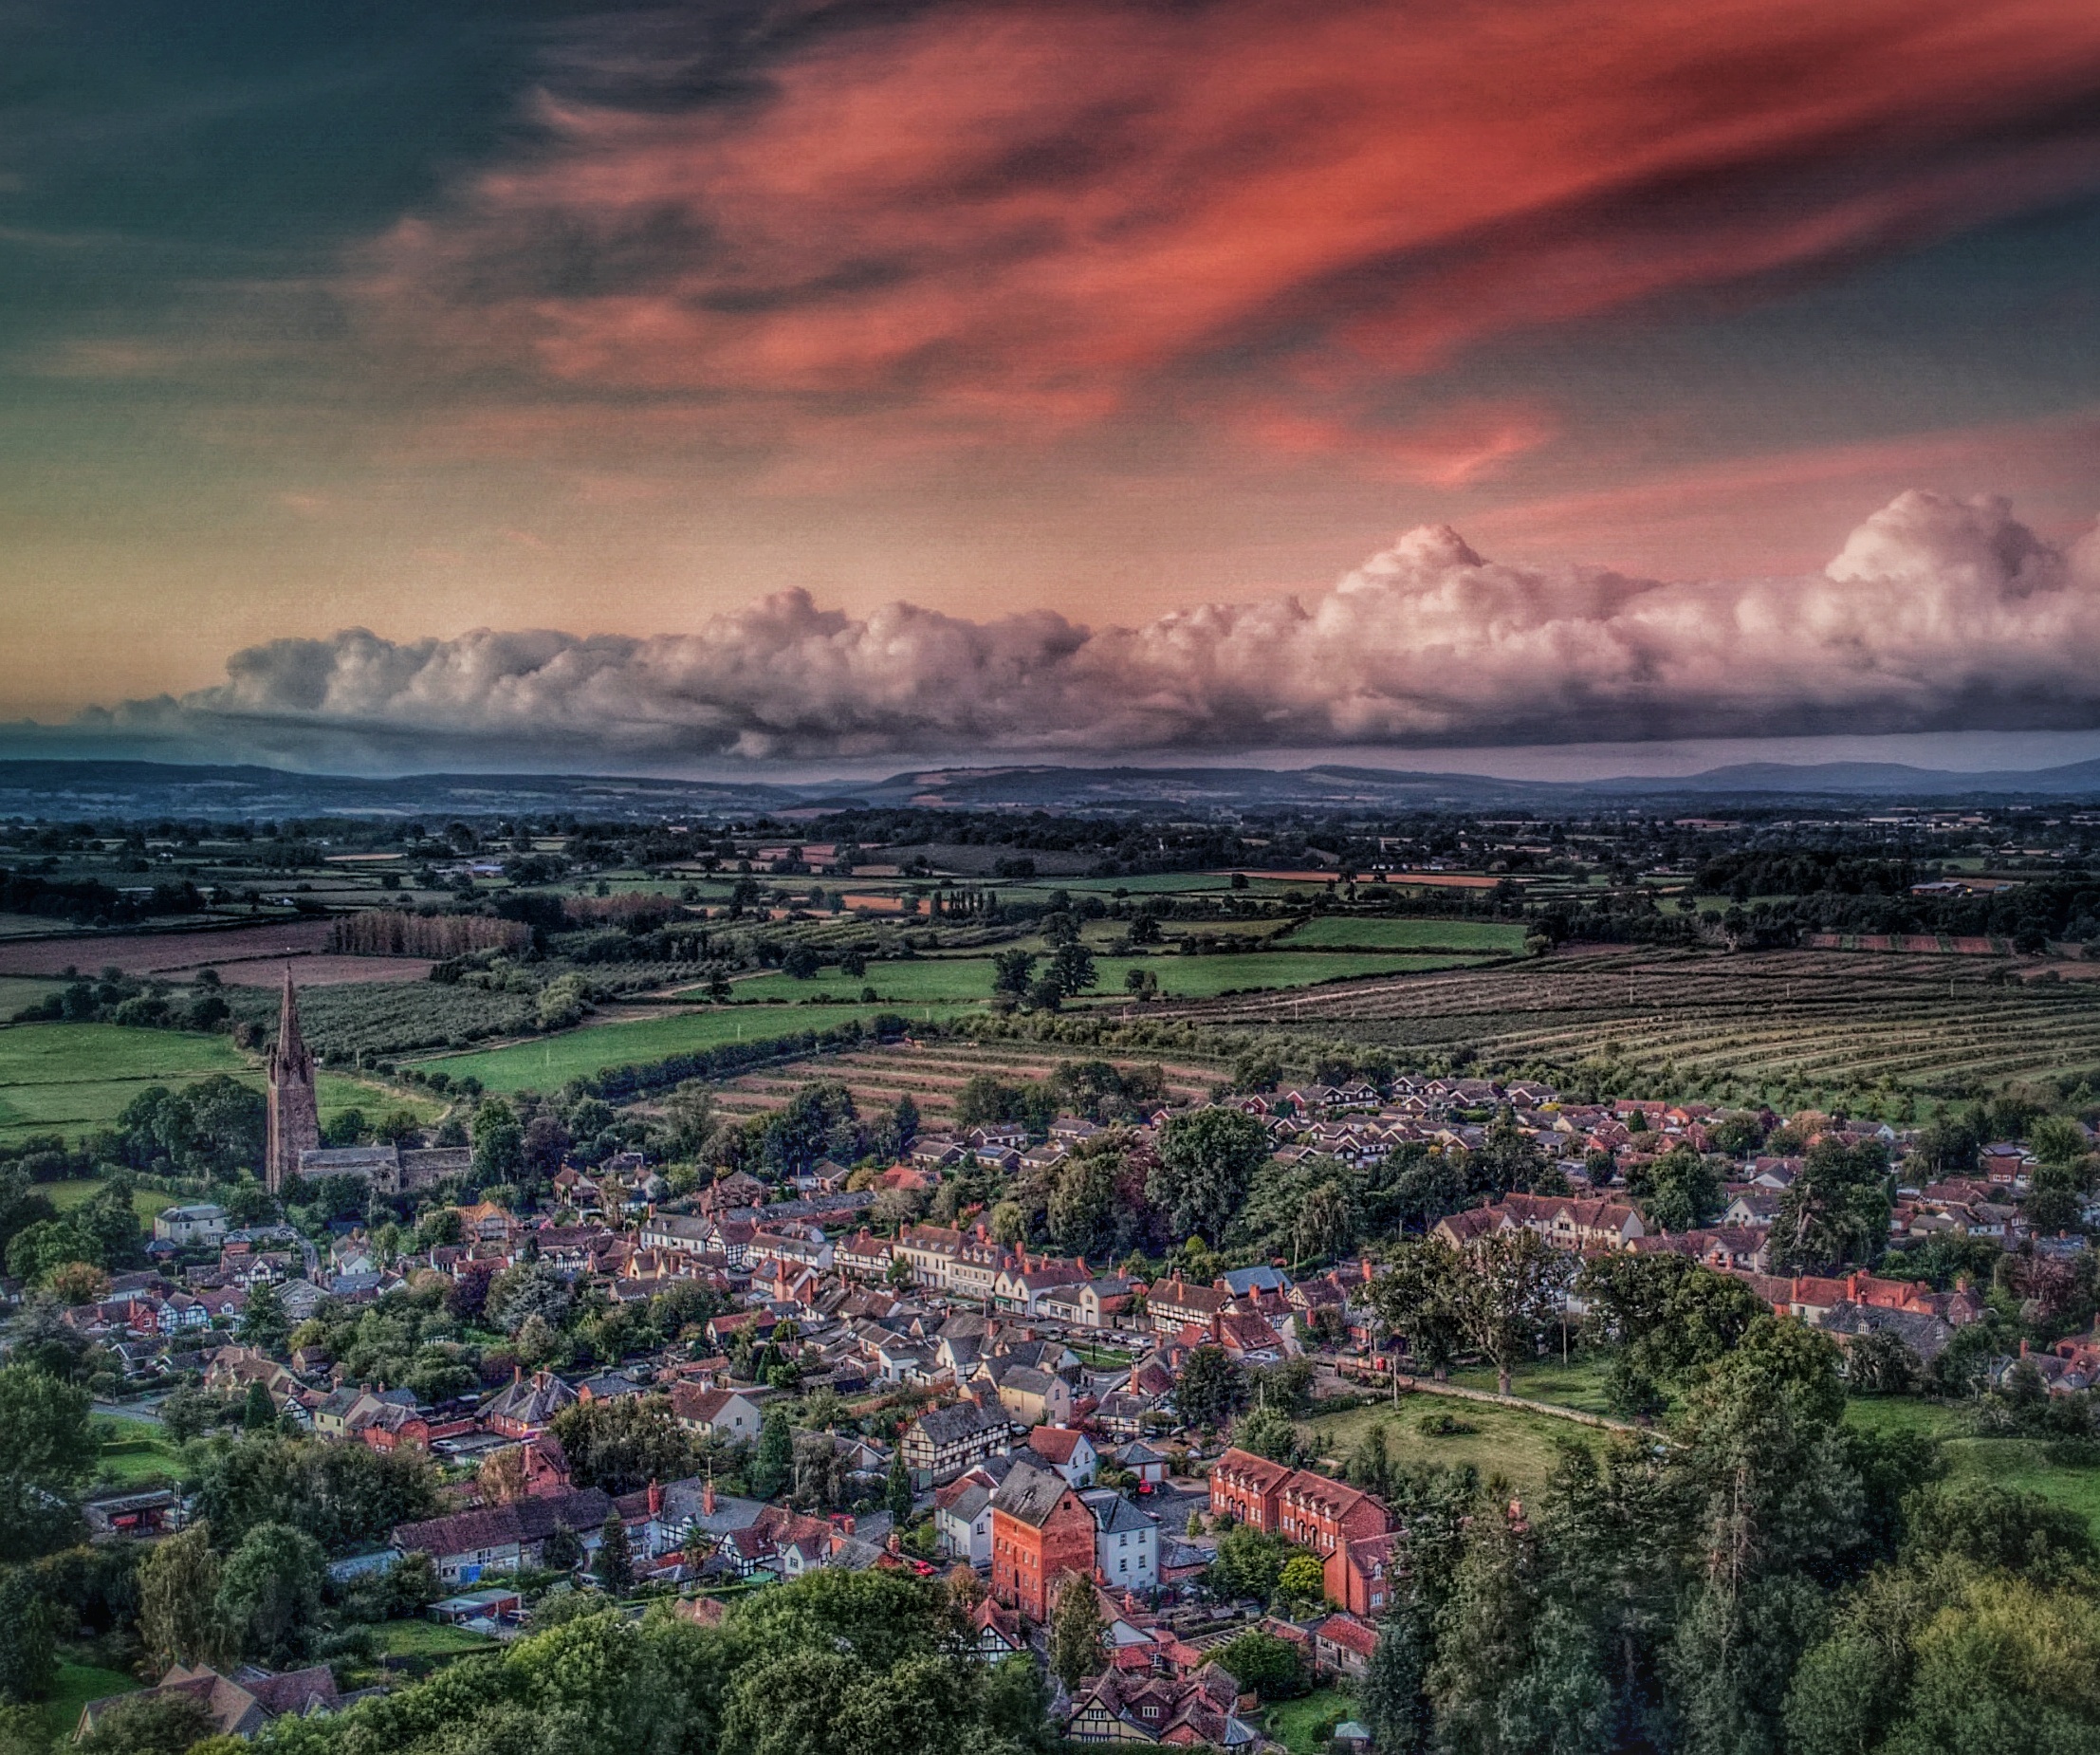 Red sky over Weobley by Tom Pennington